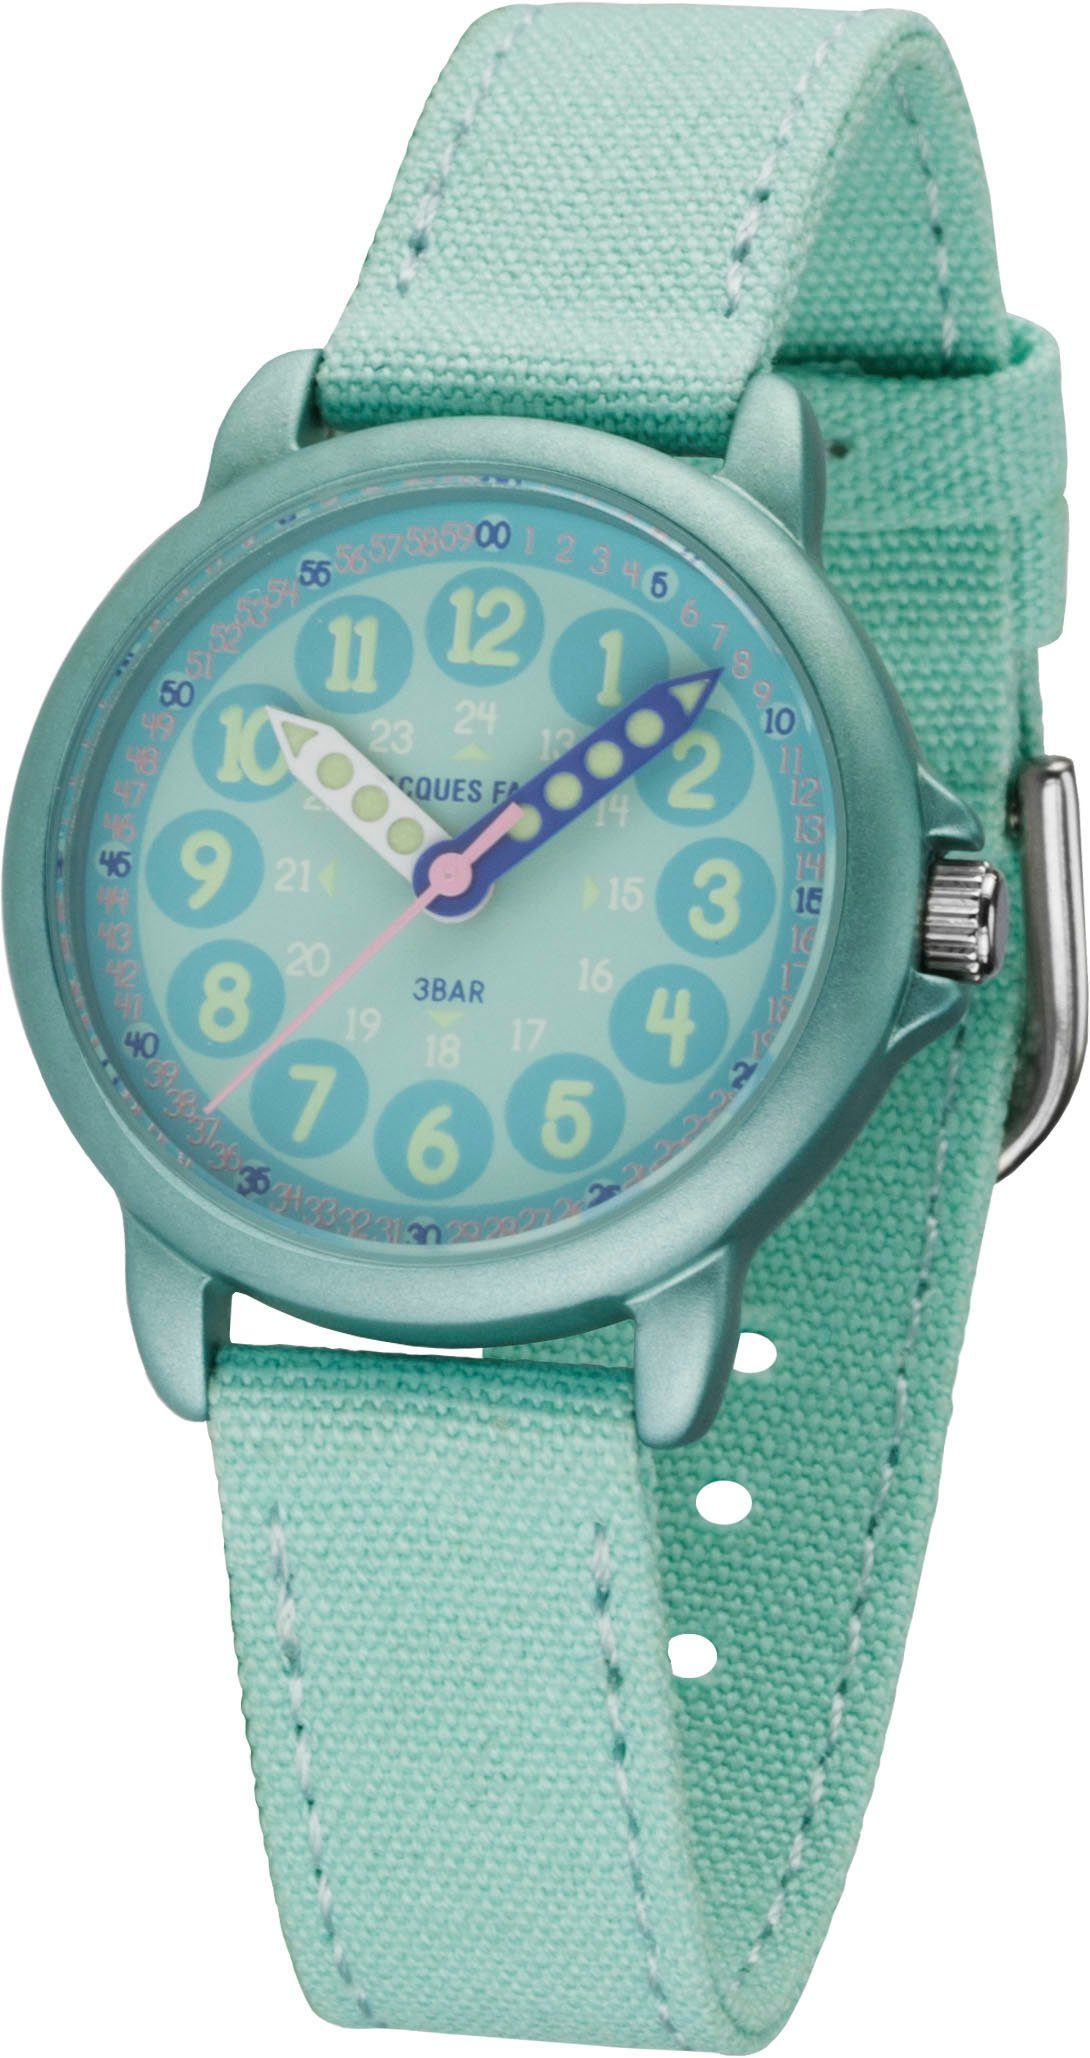 Jacques Farel Quarzuhr ORGT 1113, Armbanduhr, Kinderuhr, Mädchenuhr, ideal auch als Geschenk